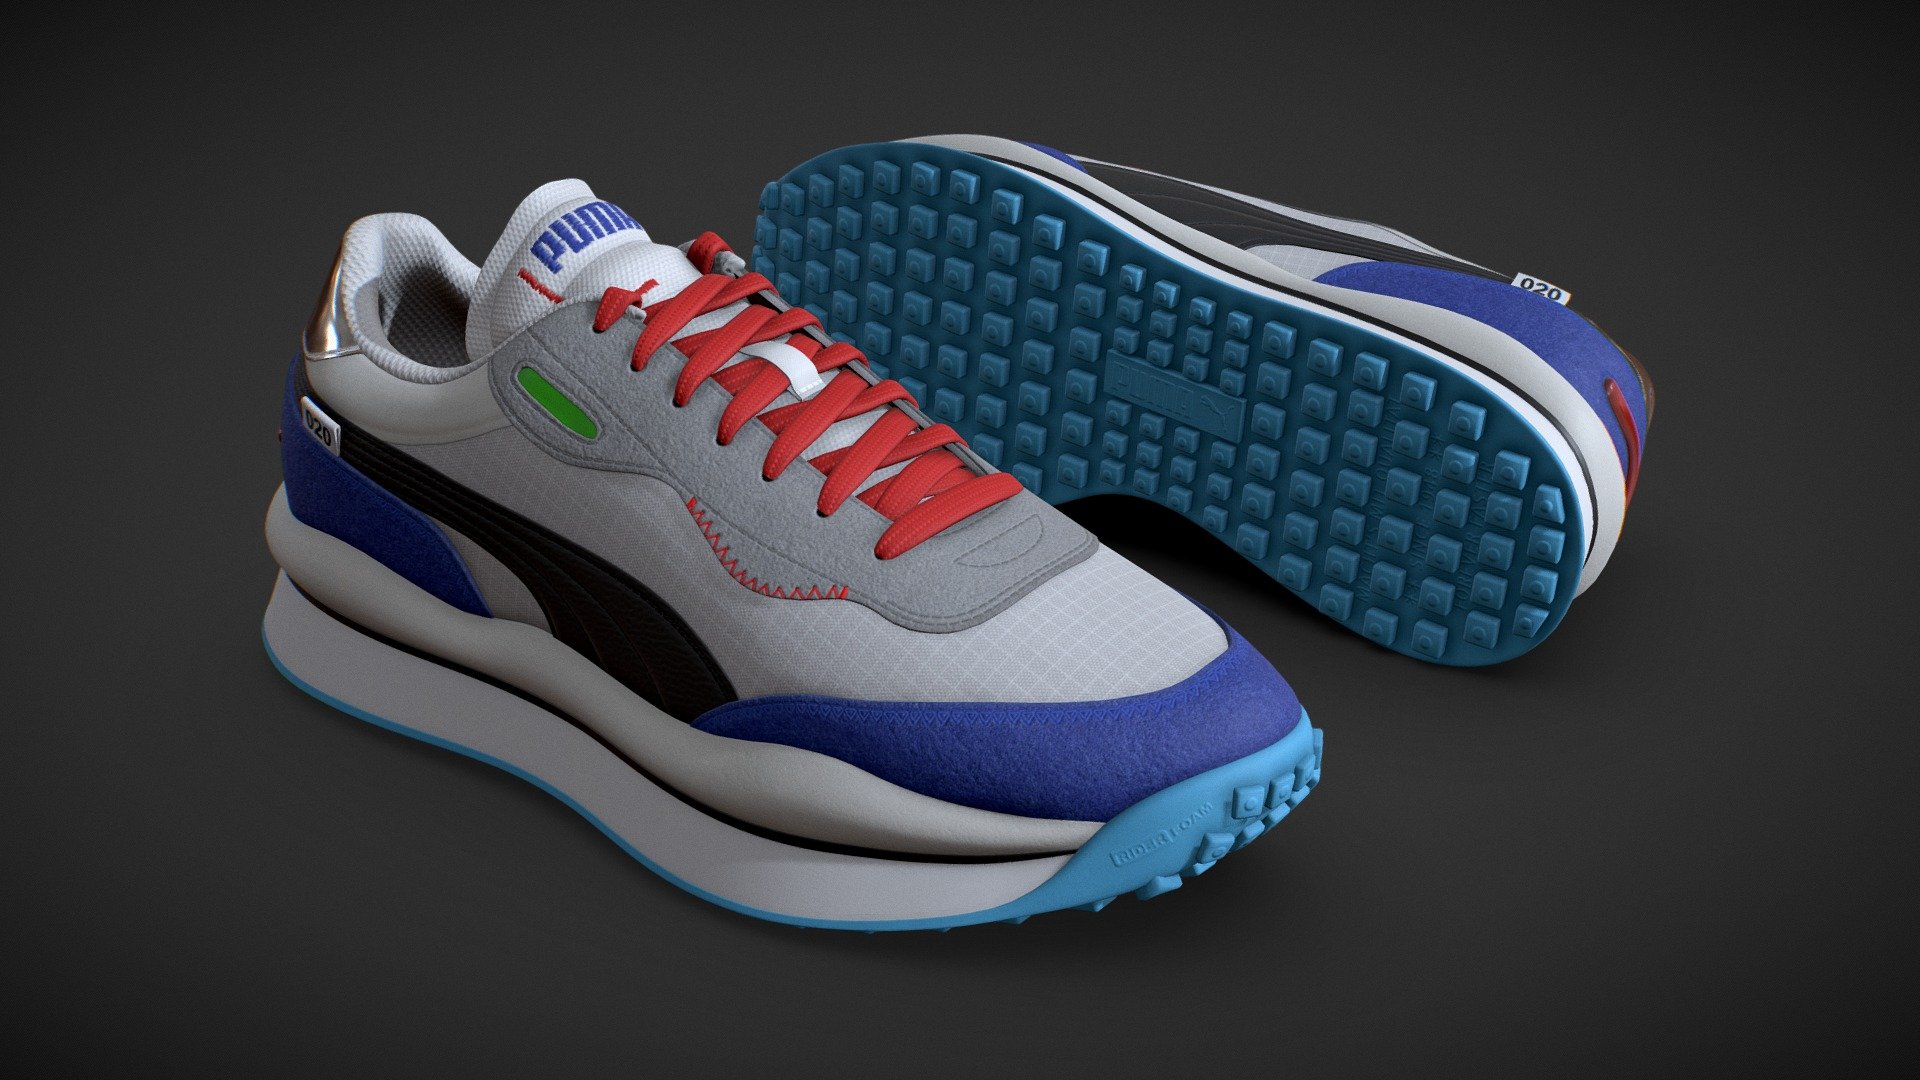 Created for www.spase.io - PUMA SNEAKERS BLUE - 3D model by Mikhail Kadilnikov (@MikhailKadilnikov) 3d model